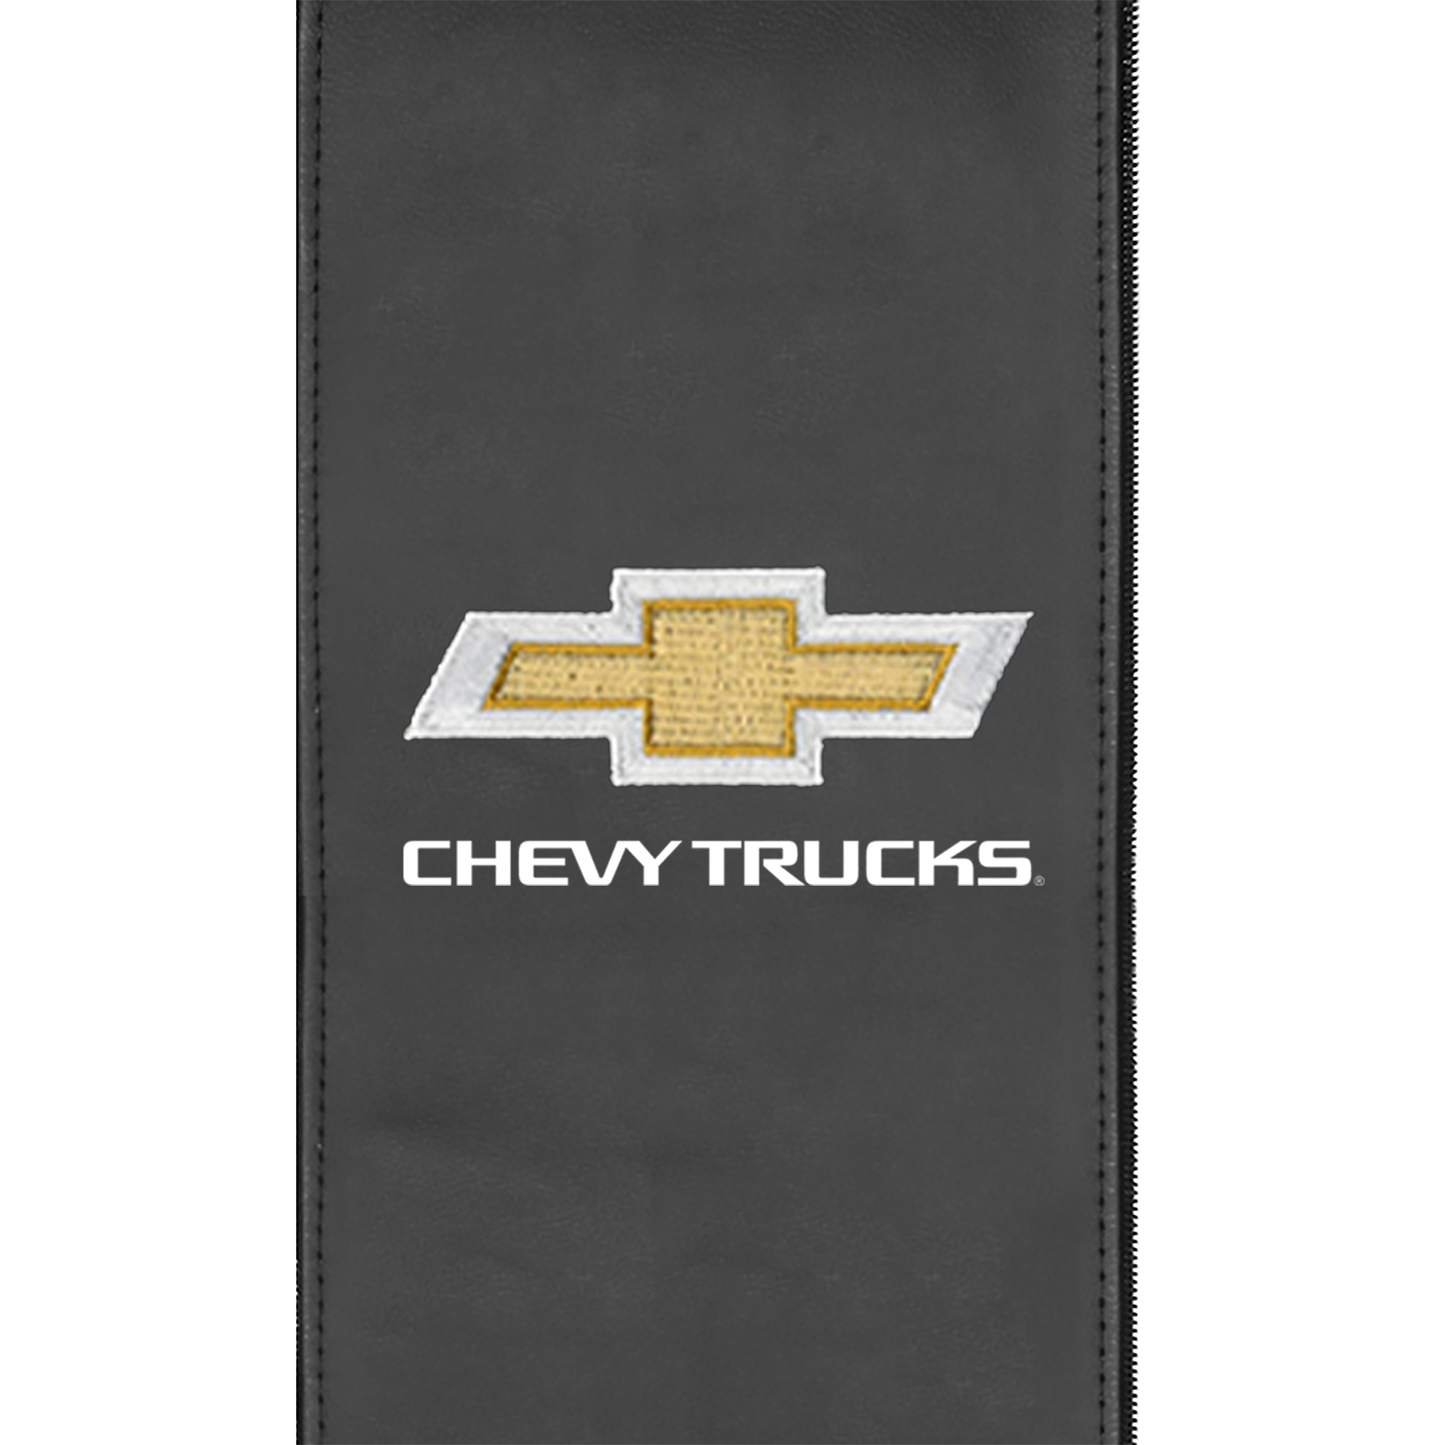 Silver Club Chair with Chevy Trucks Logo